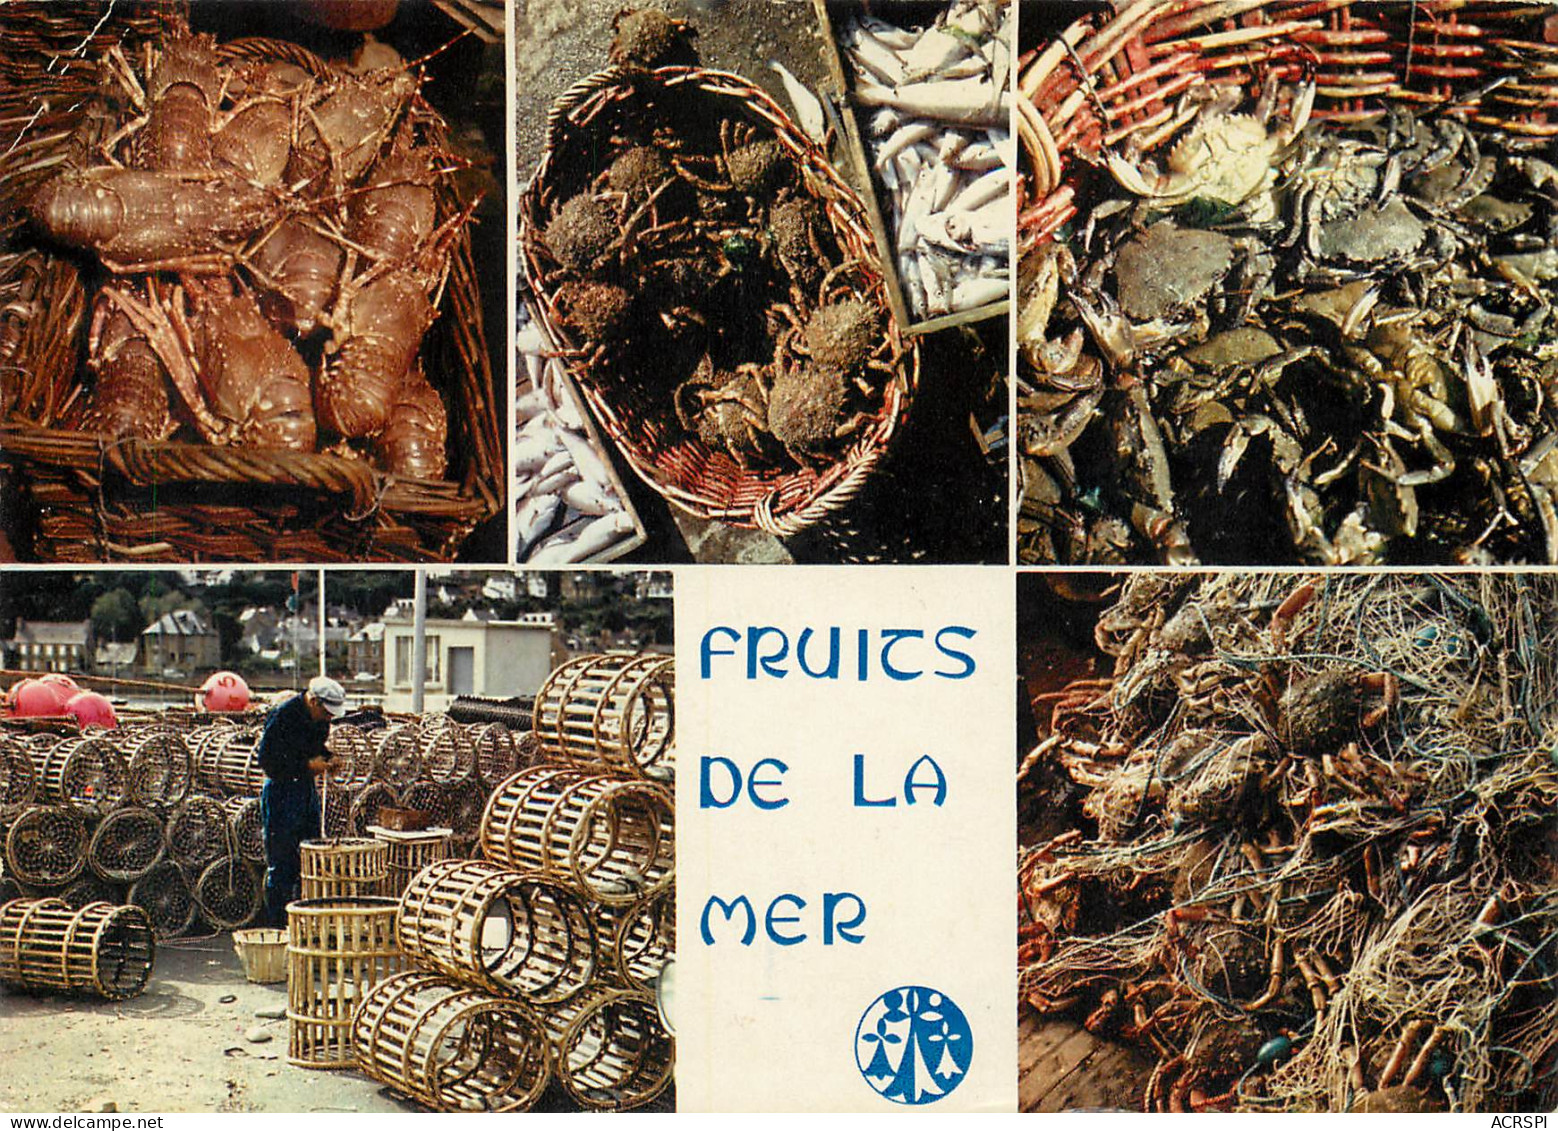 Recette  Les Fruits De La Mer De Bretagne  38  (scan Recto-verso)MA2288Bis - Ricette Di Cucina